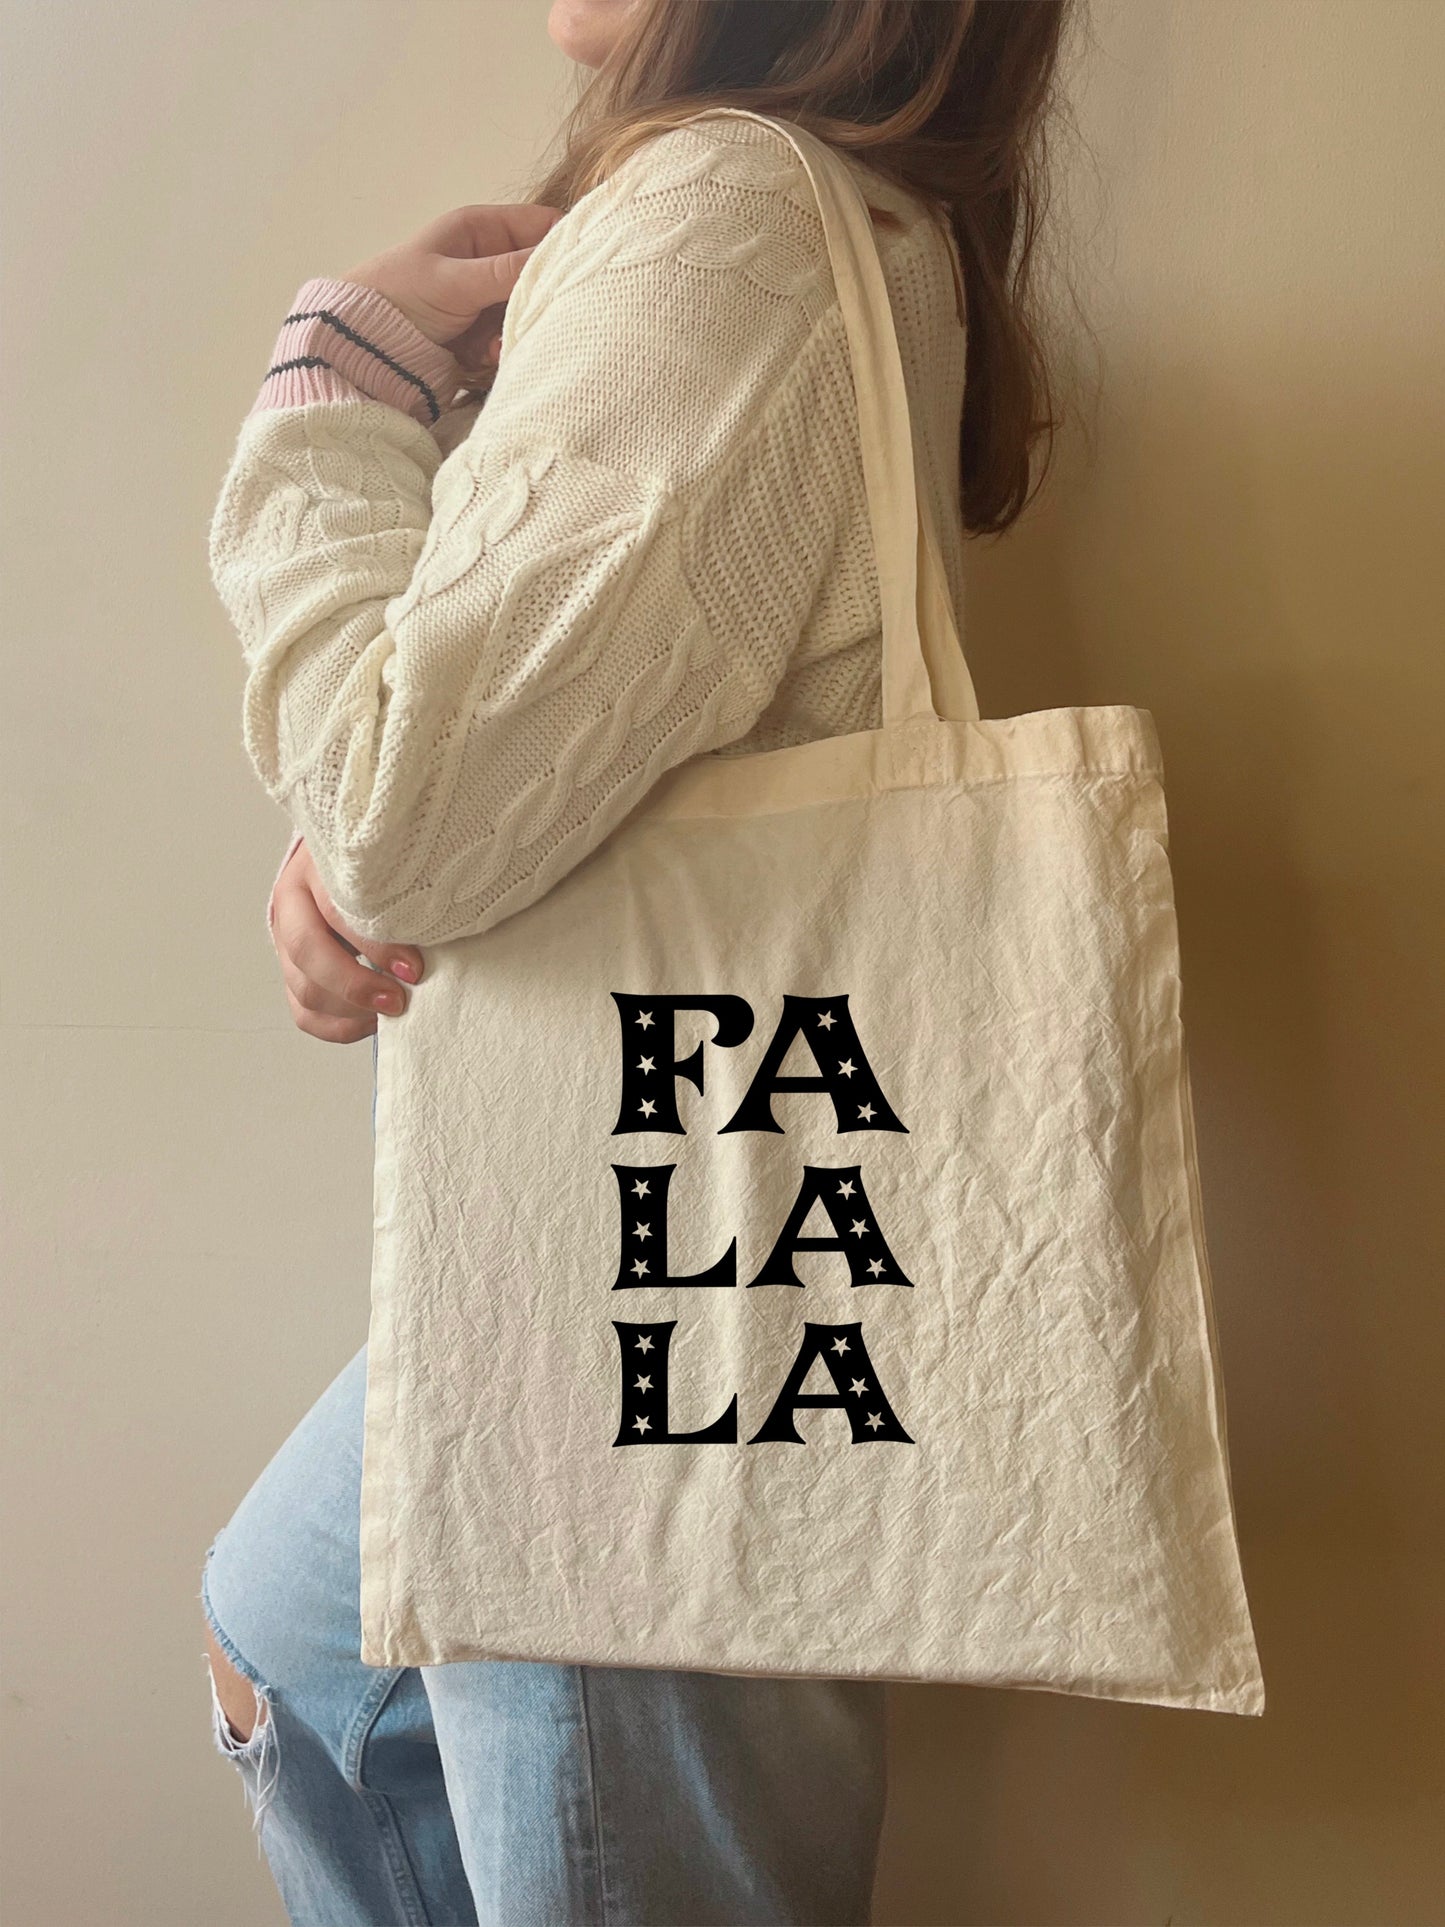 Fa La La | Christmas Tote Bag